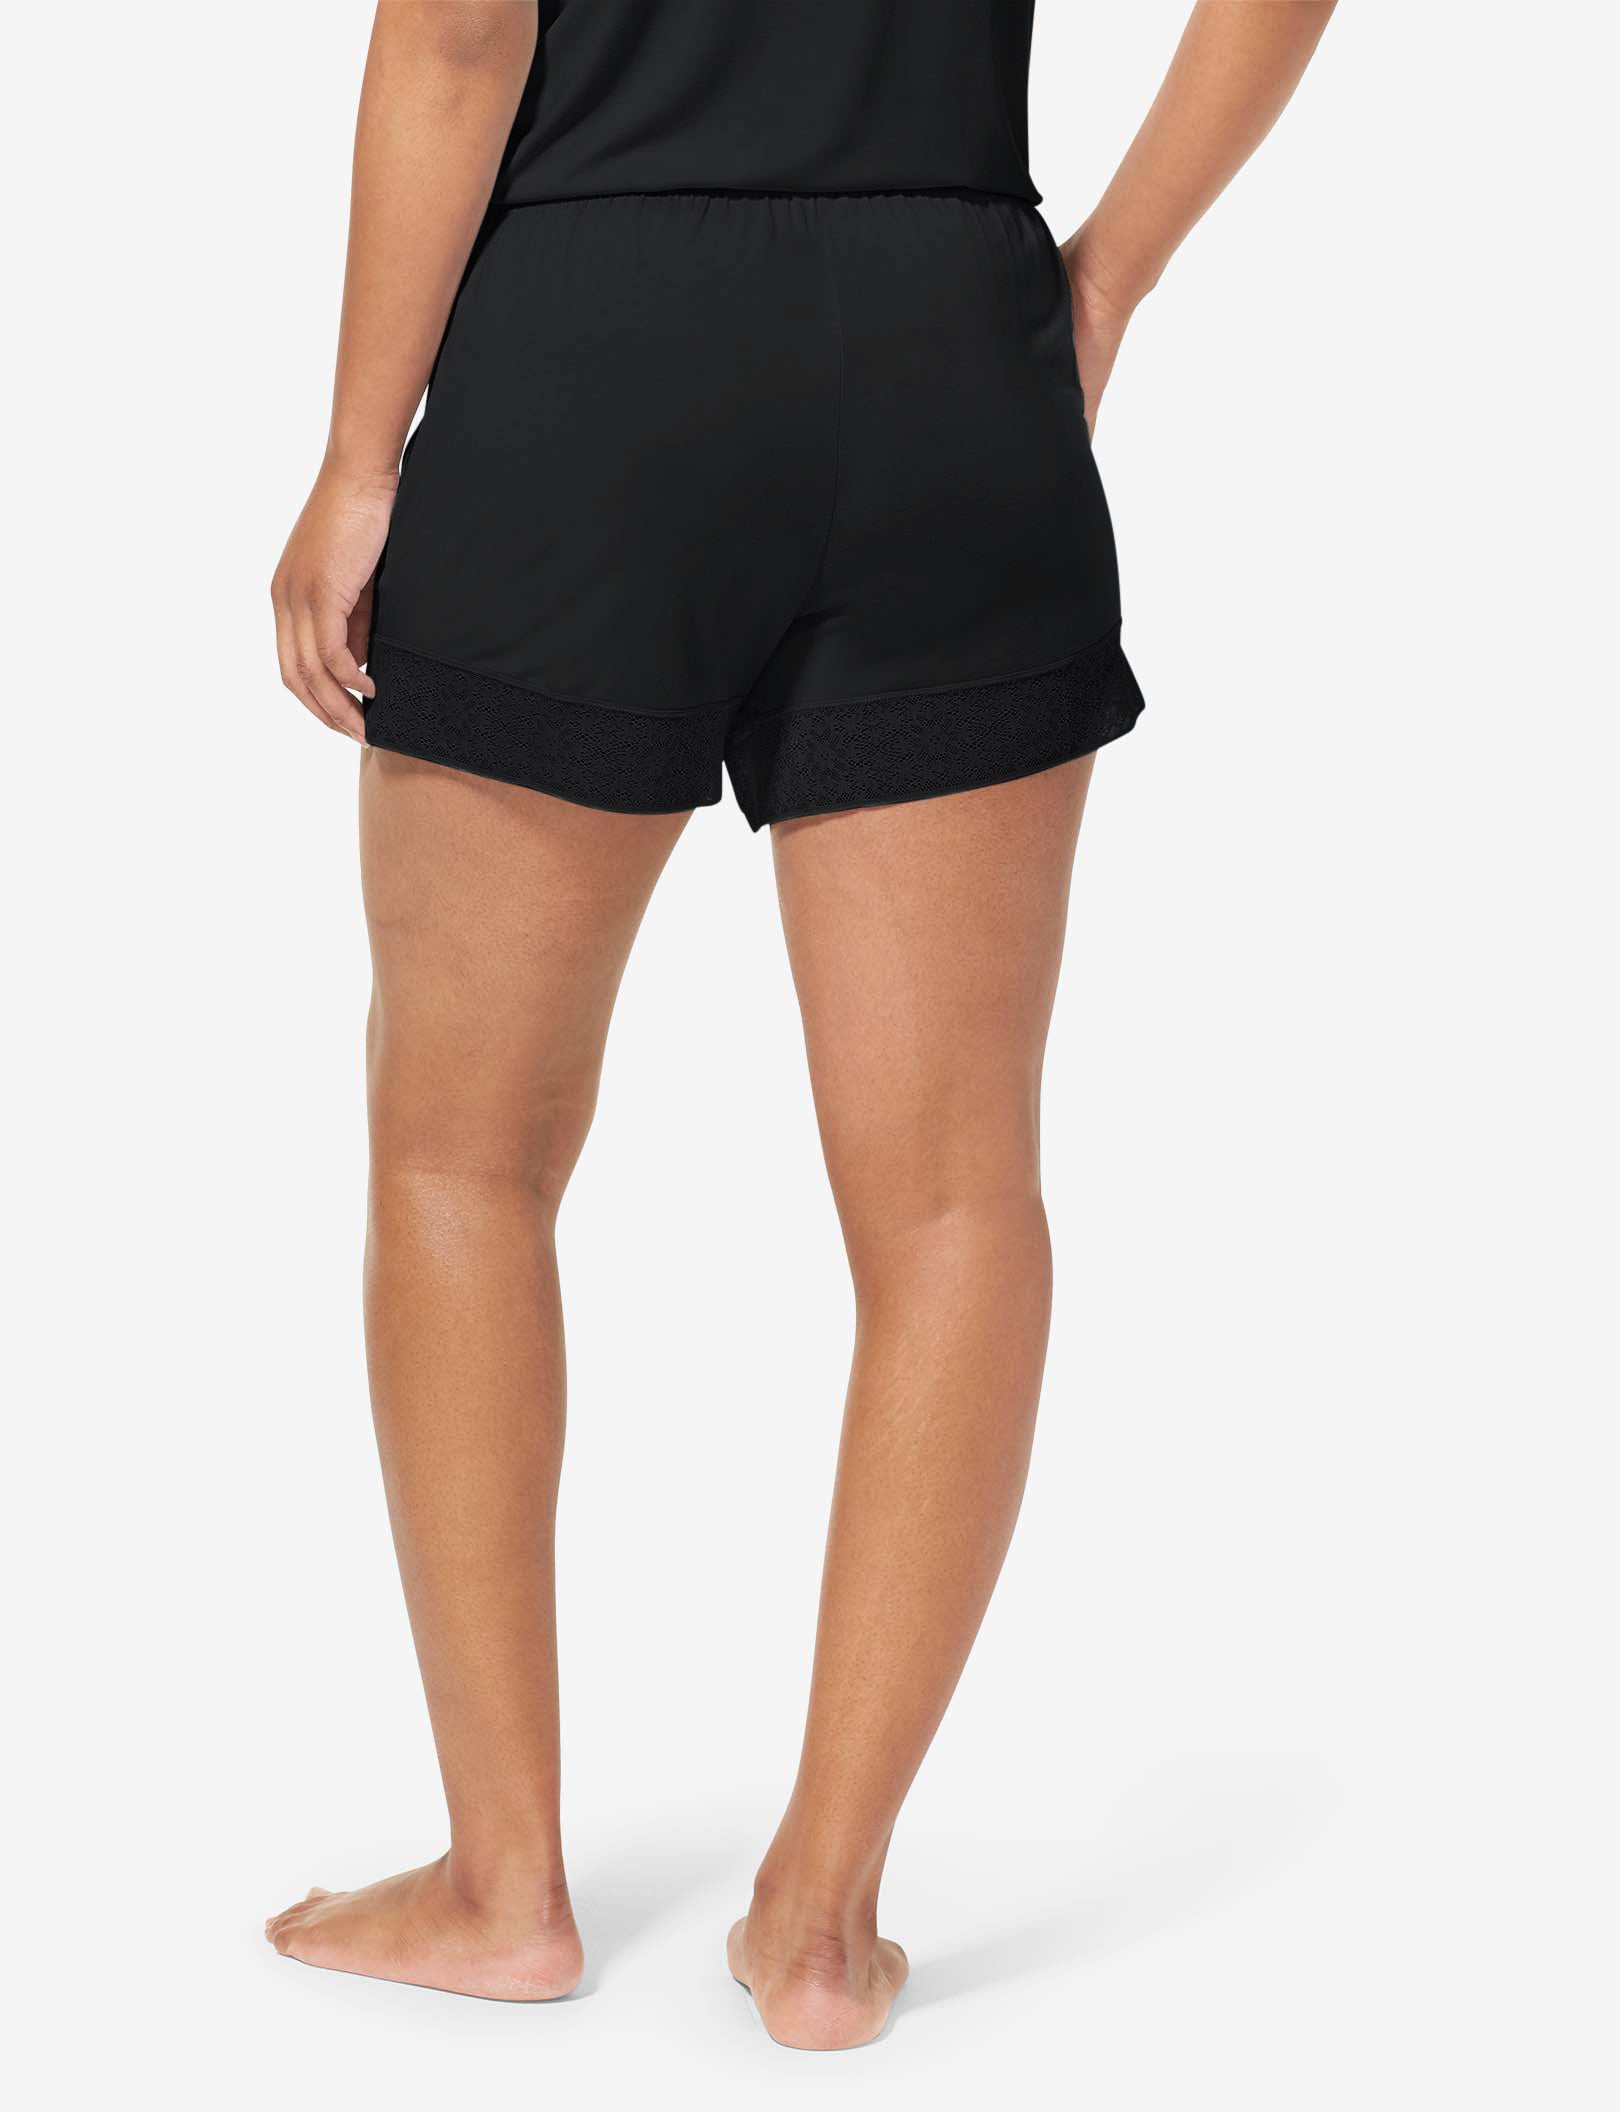 Women's Lace Trim Short Sleeve Top and Short Pajama Set, Black